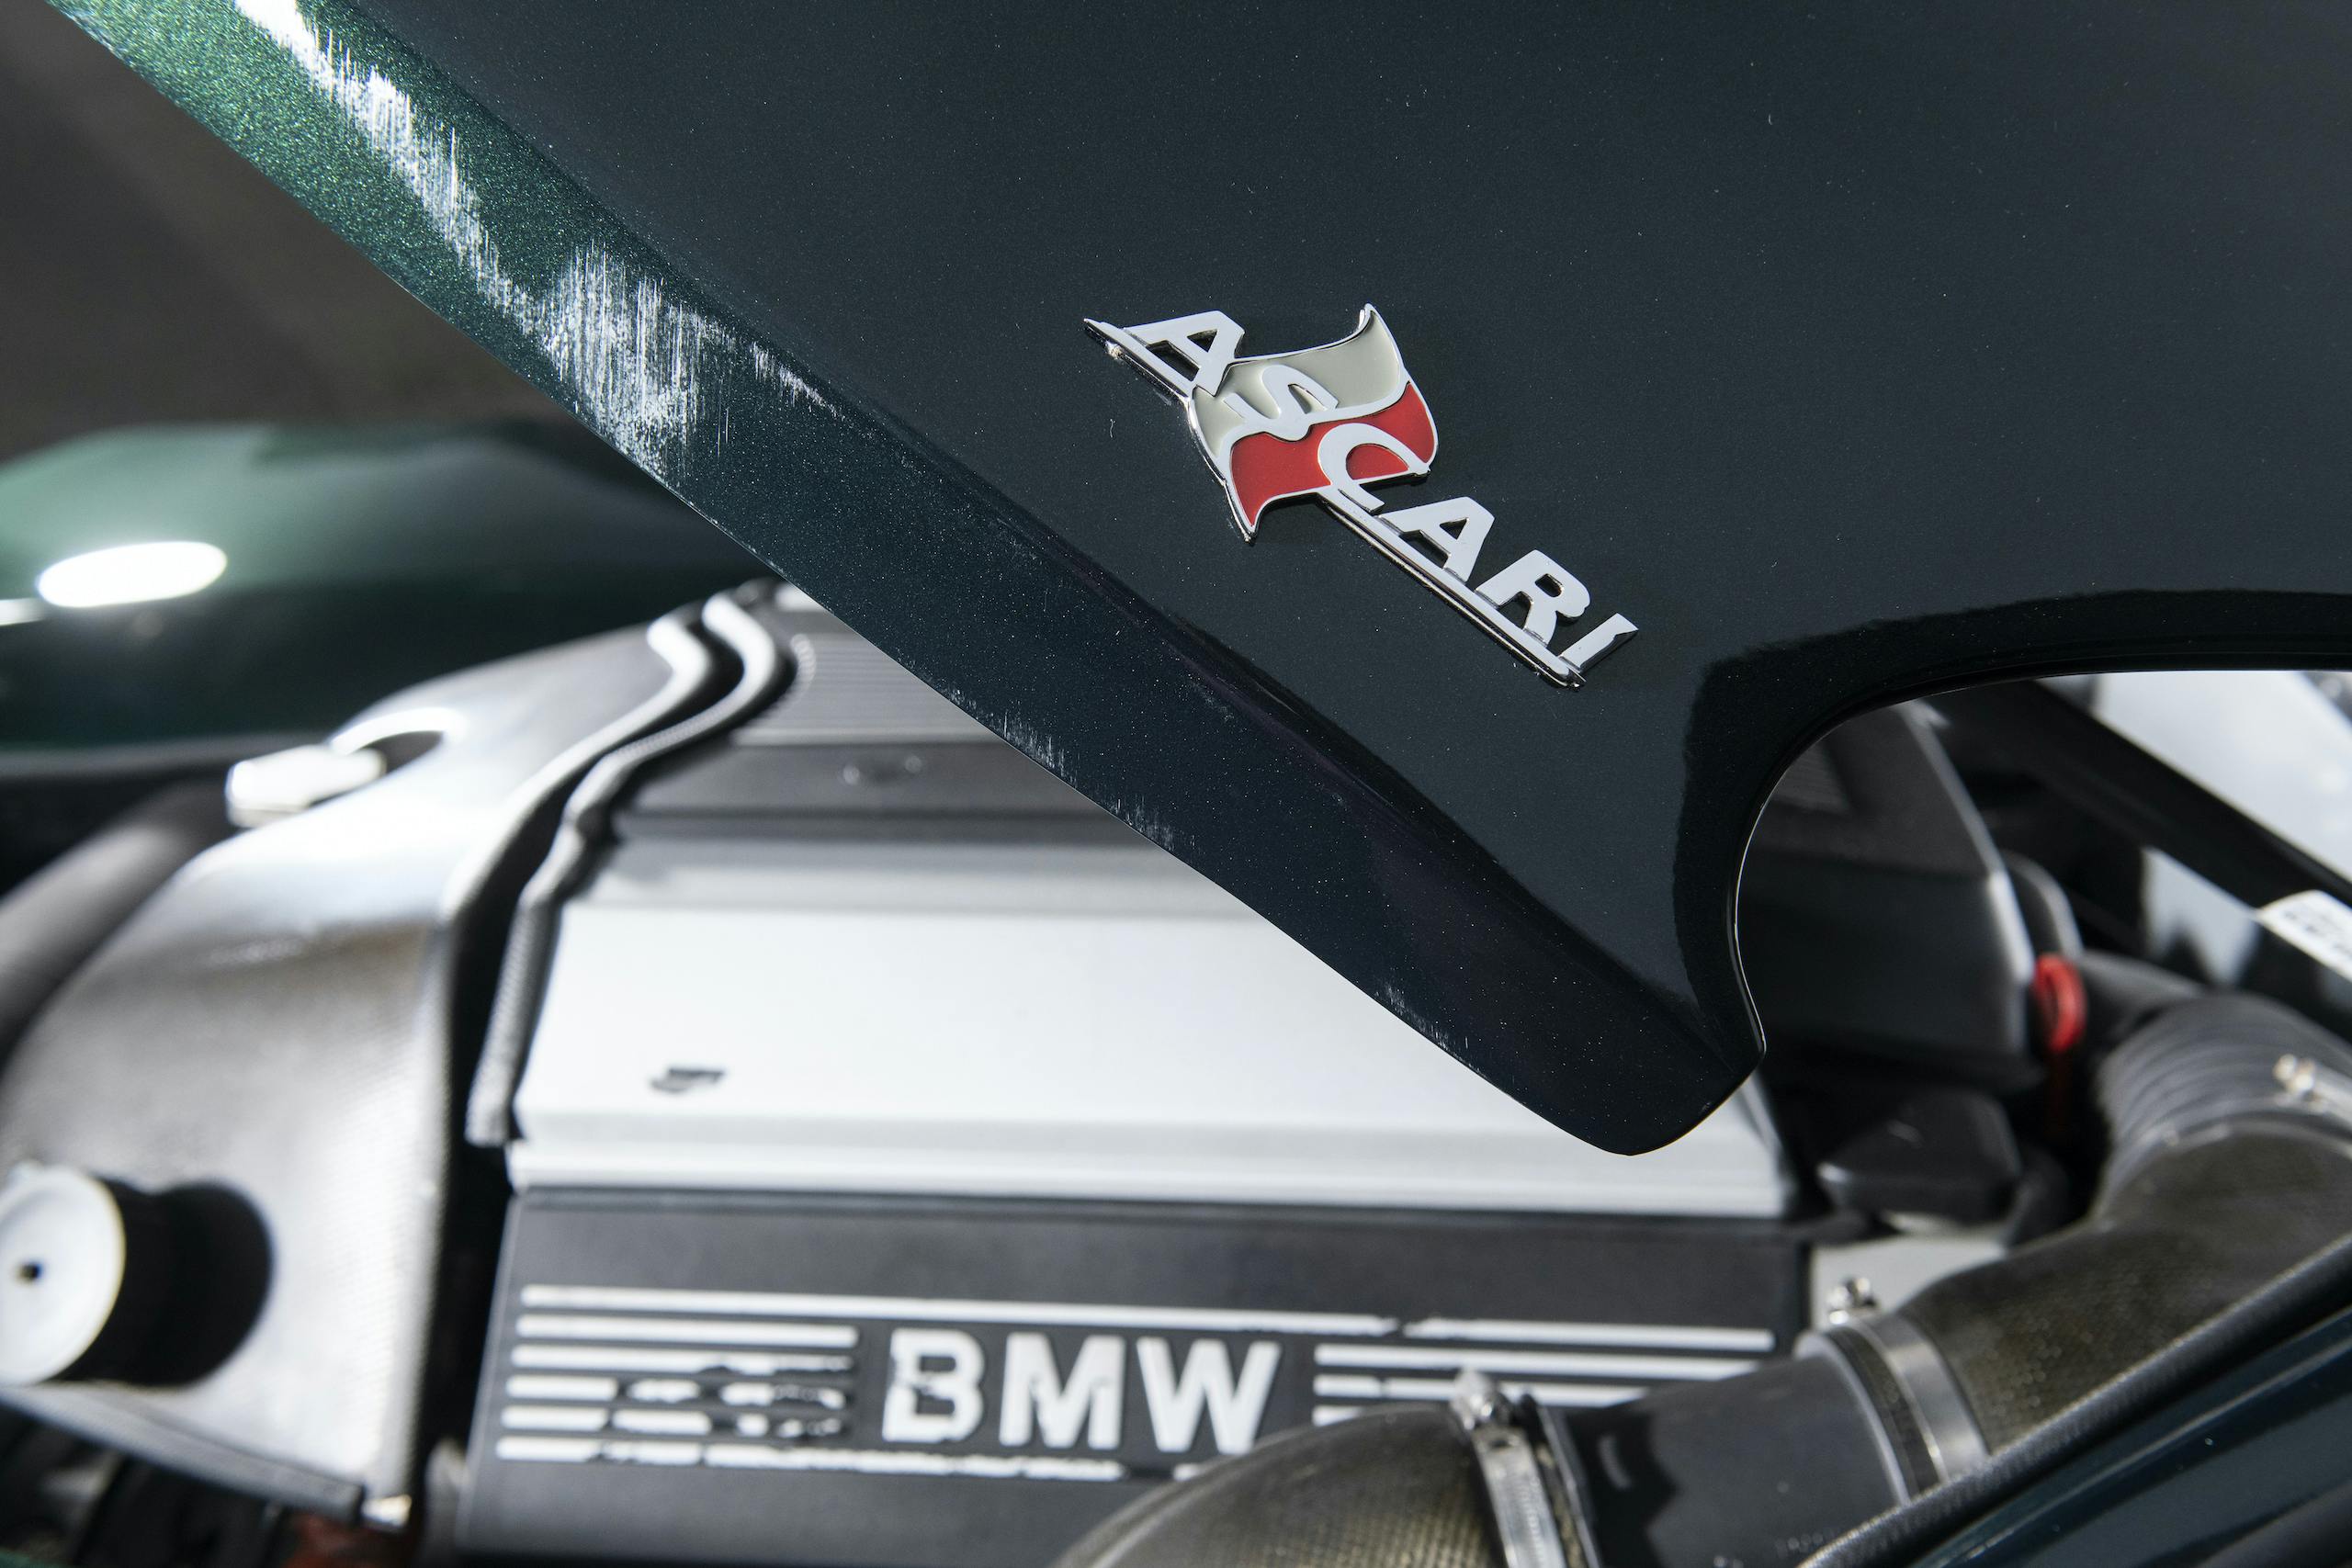 1997 Ascari Ecosse bmw engine ascari hood badge